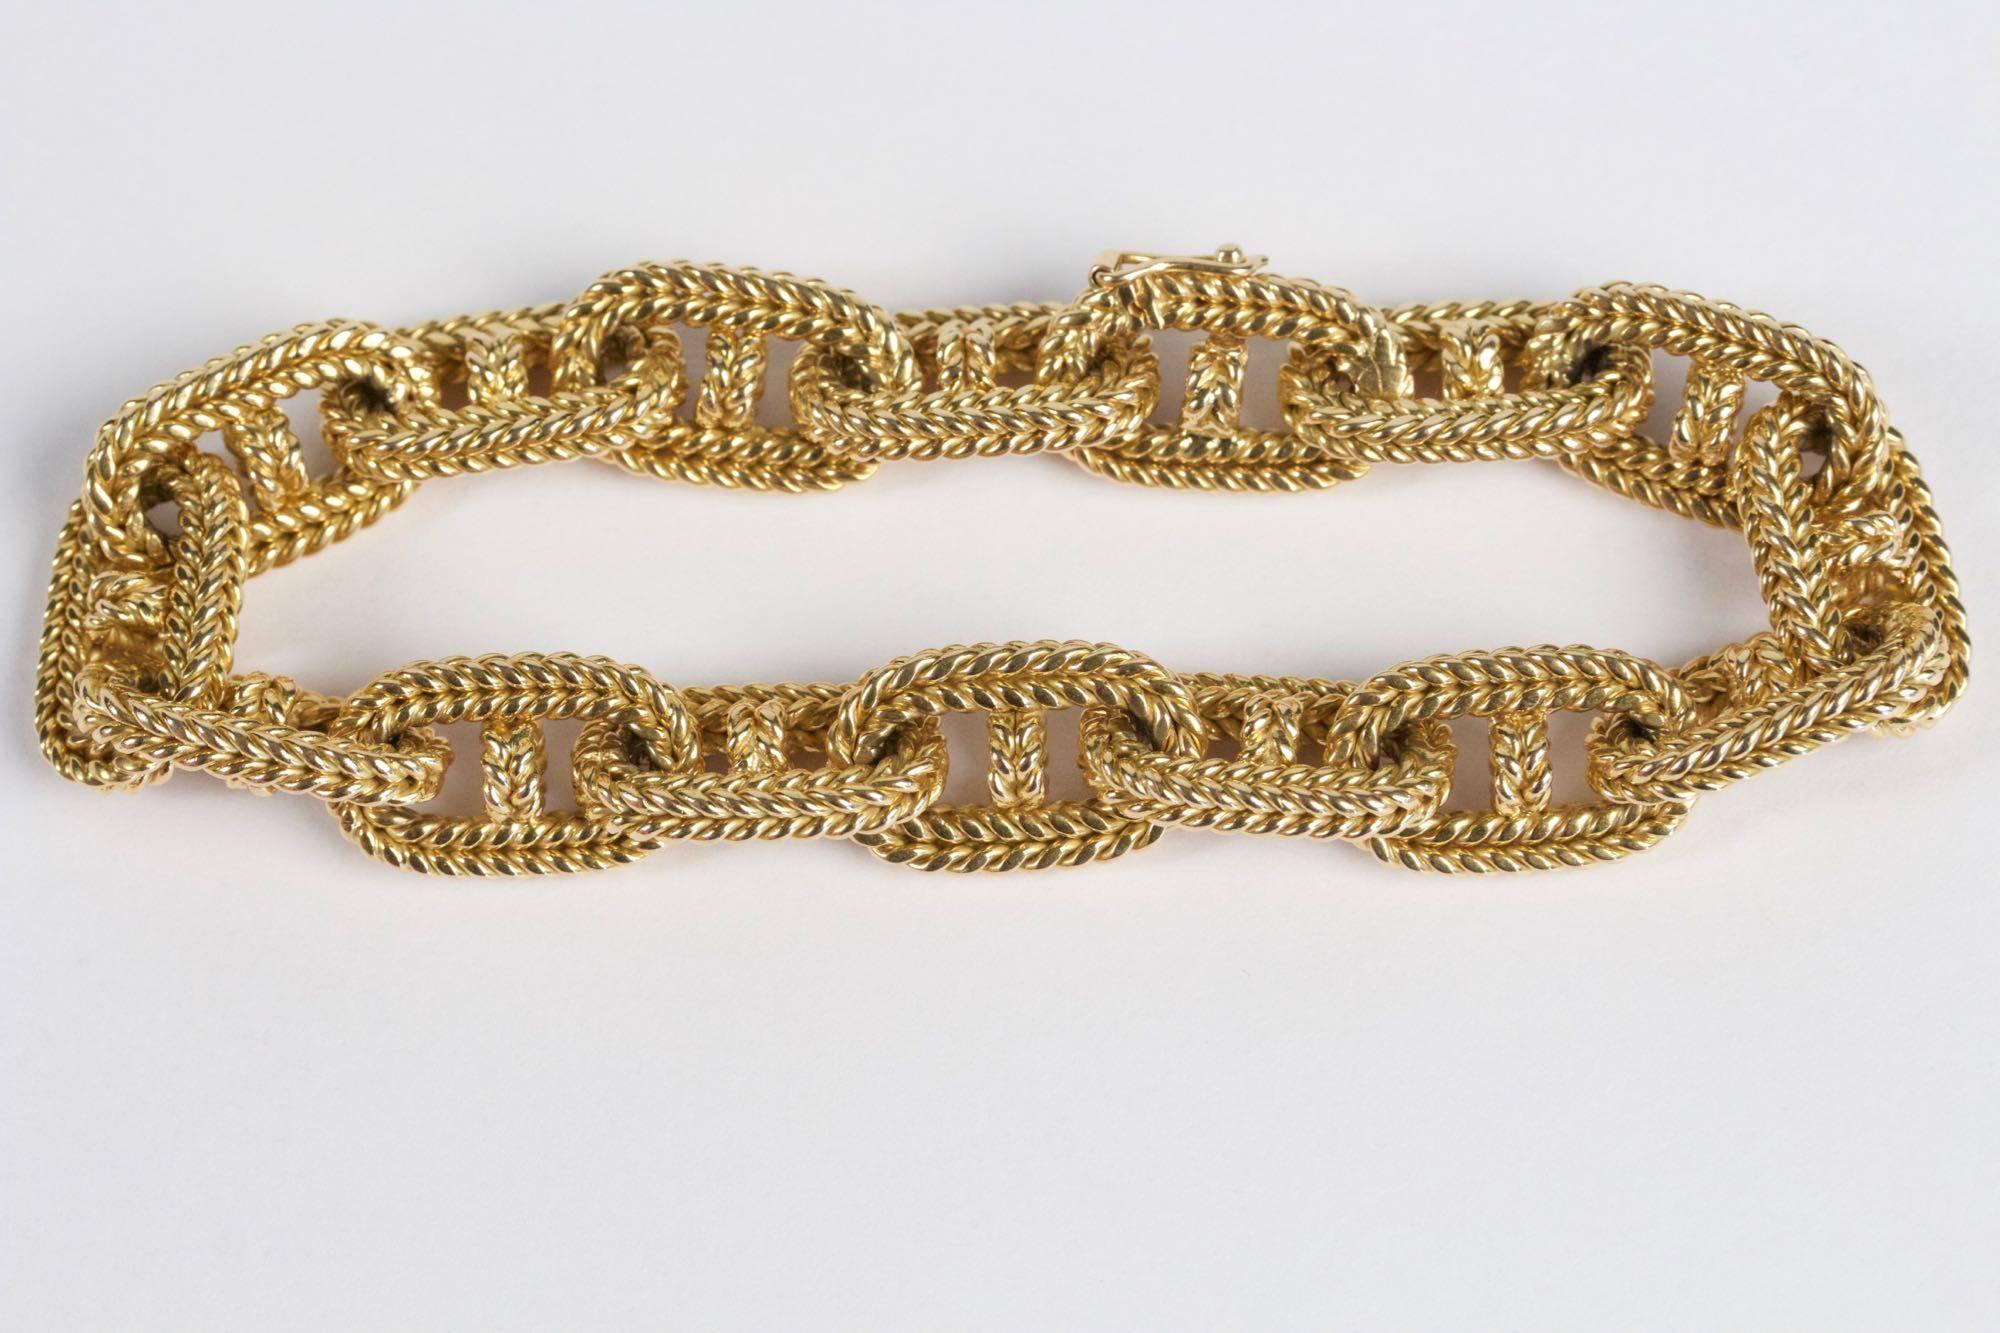 18k Yellow Gold chain link bracelet. Circa 1960.
Length 20 cm.

